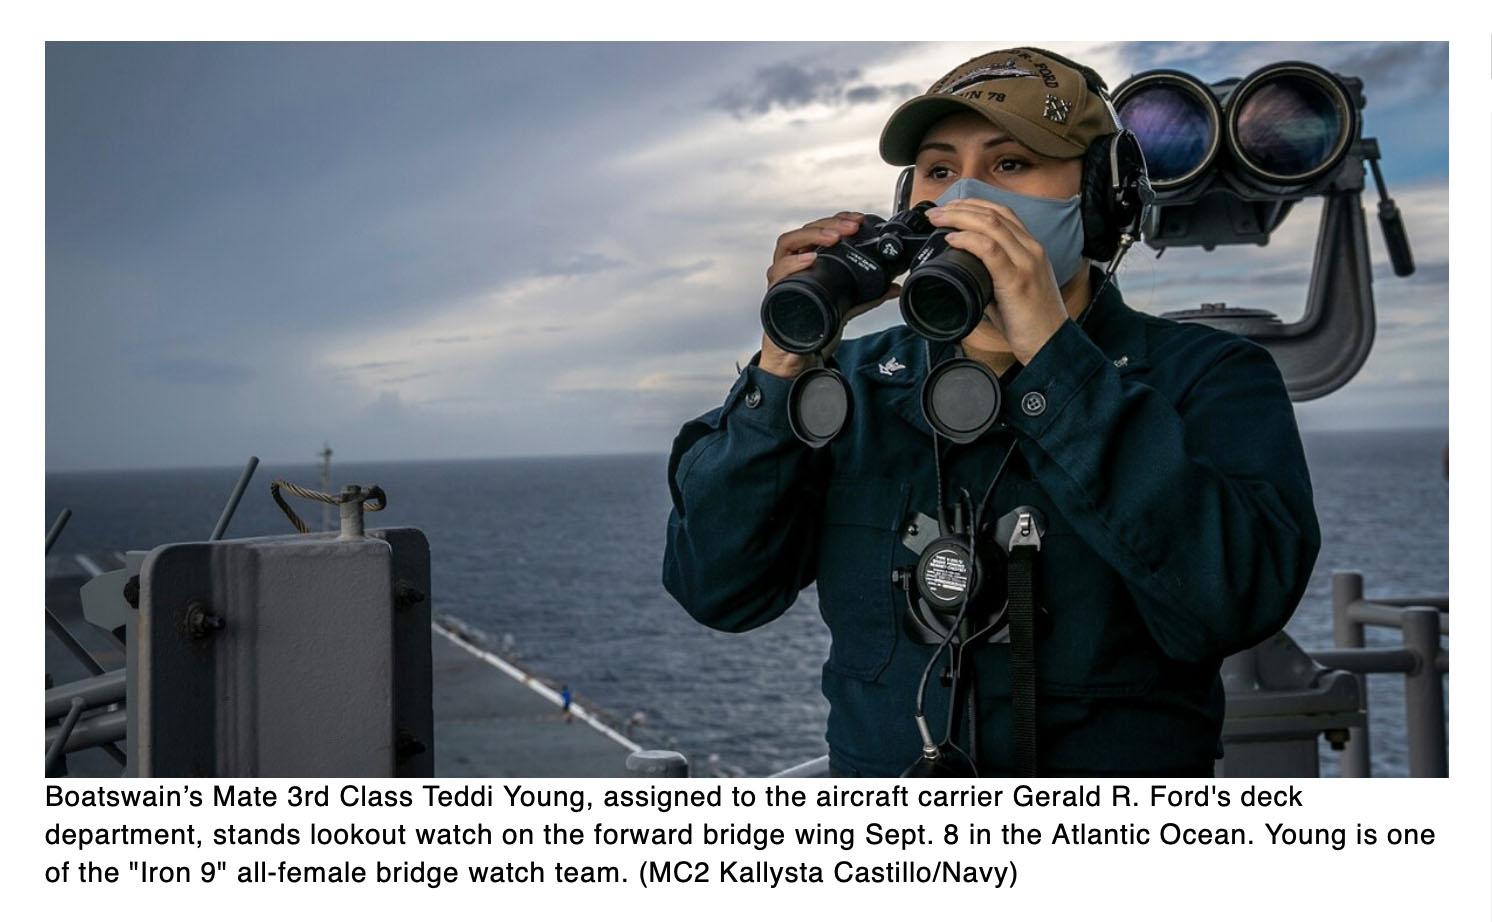  USS Fords all-female bridge watch team is impressing fellow sailors